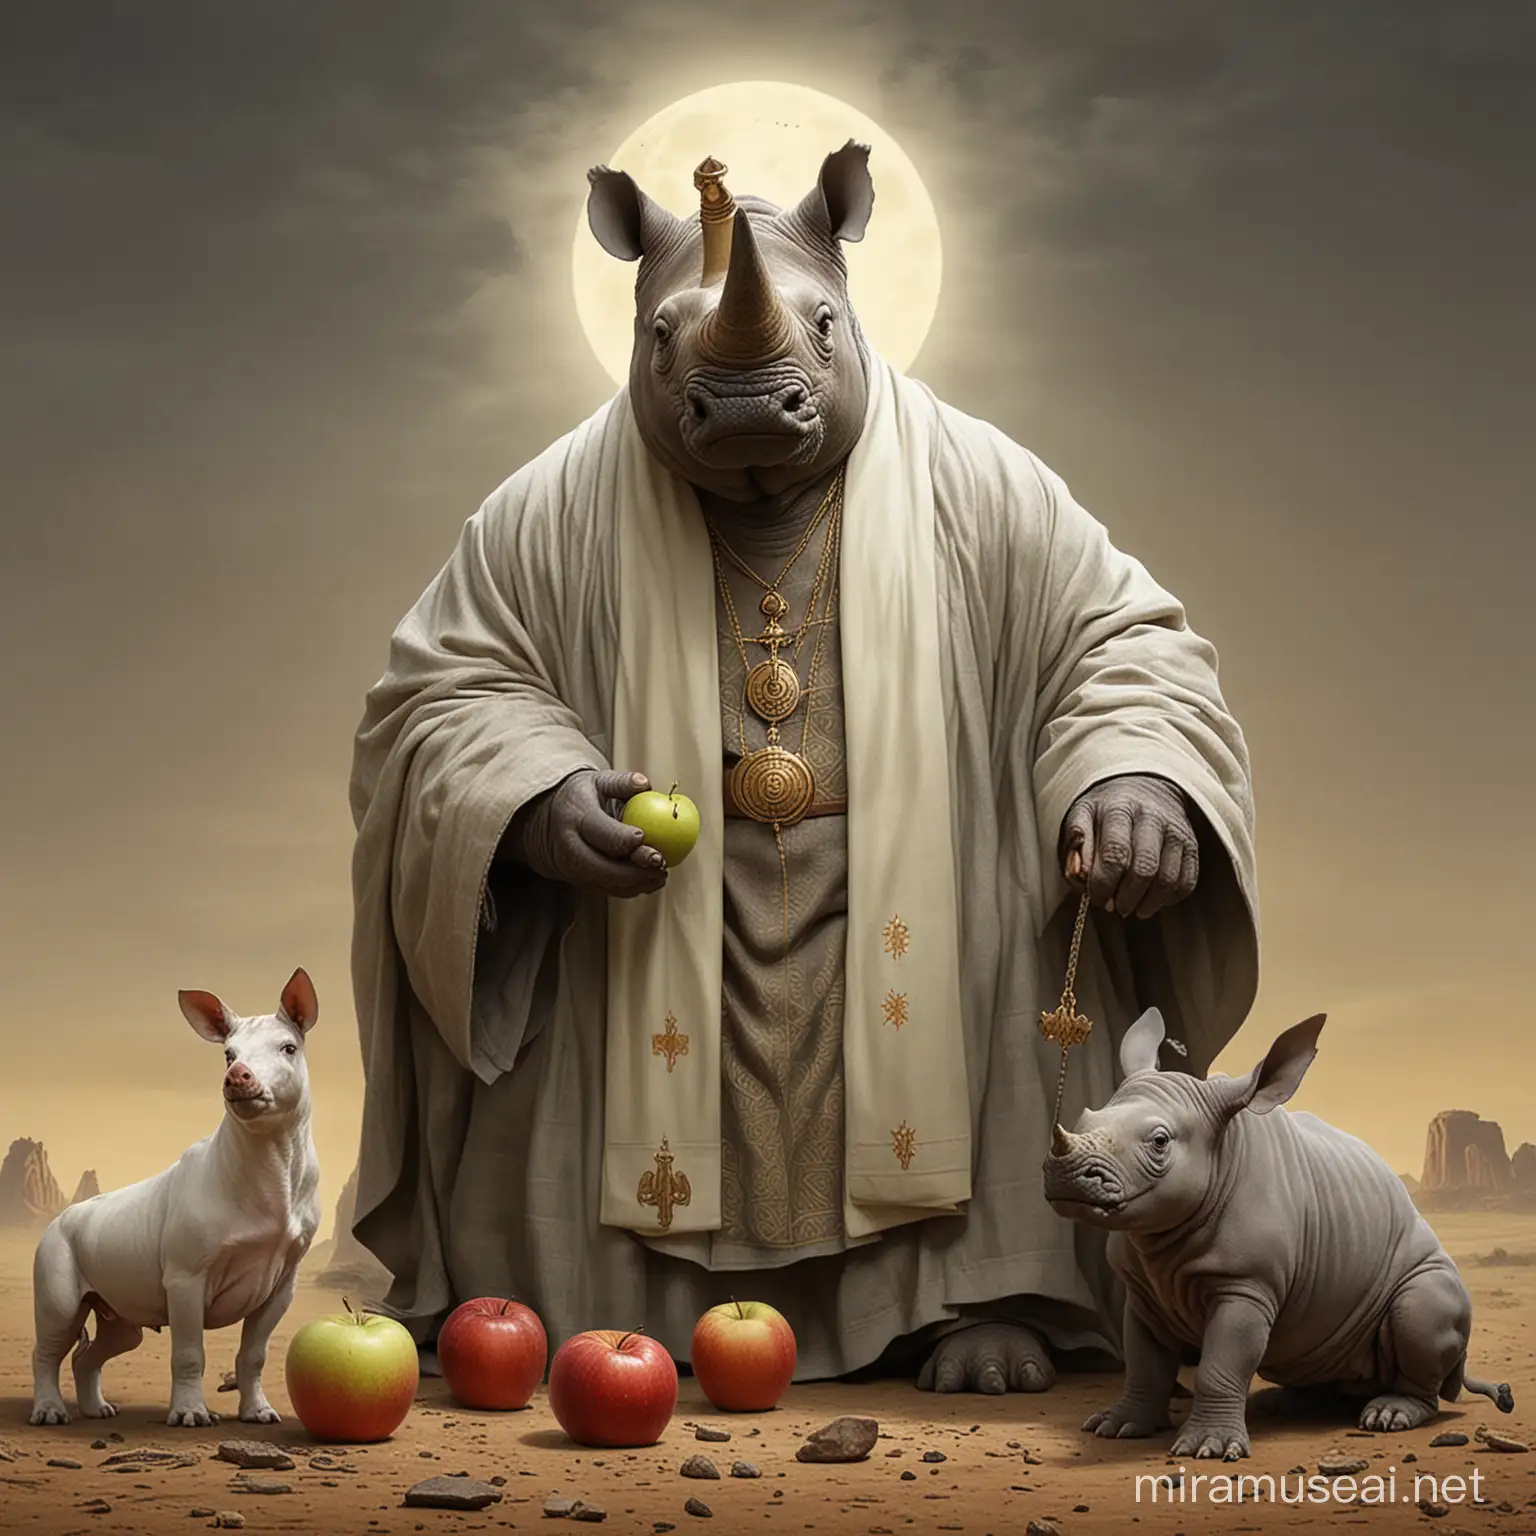 rhino, priest, dog, apple

